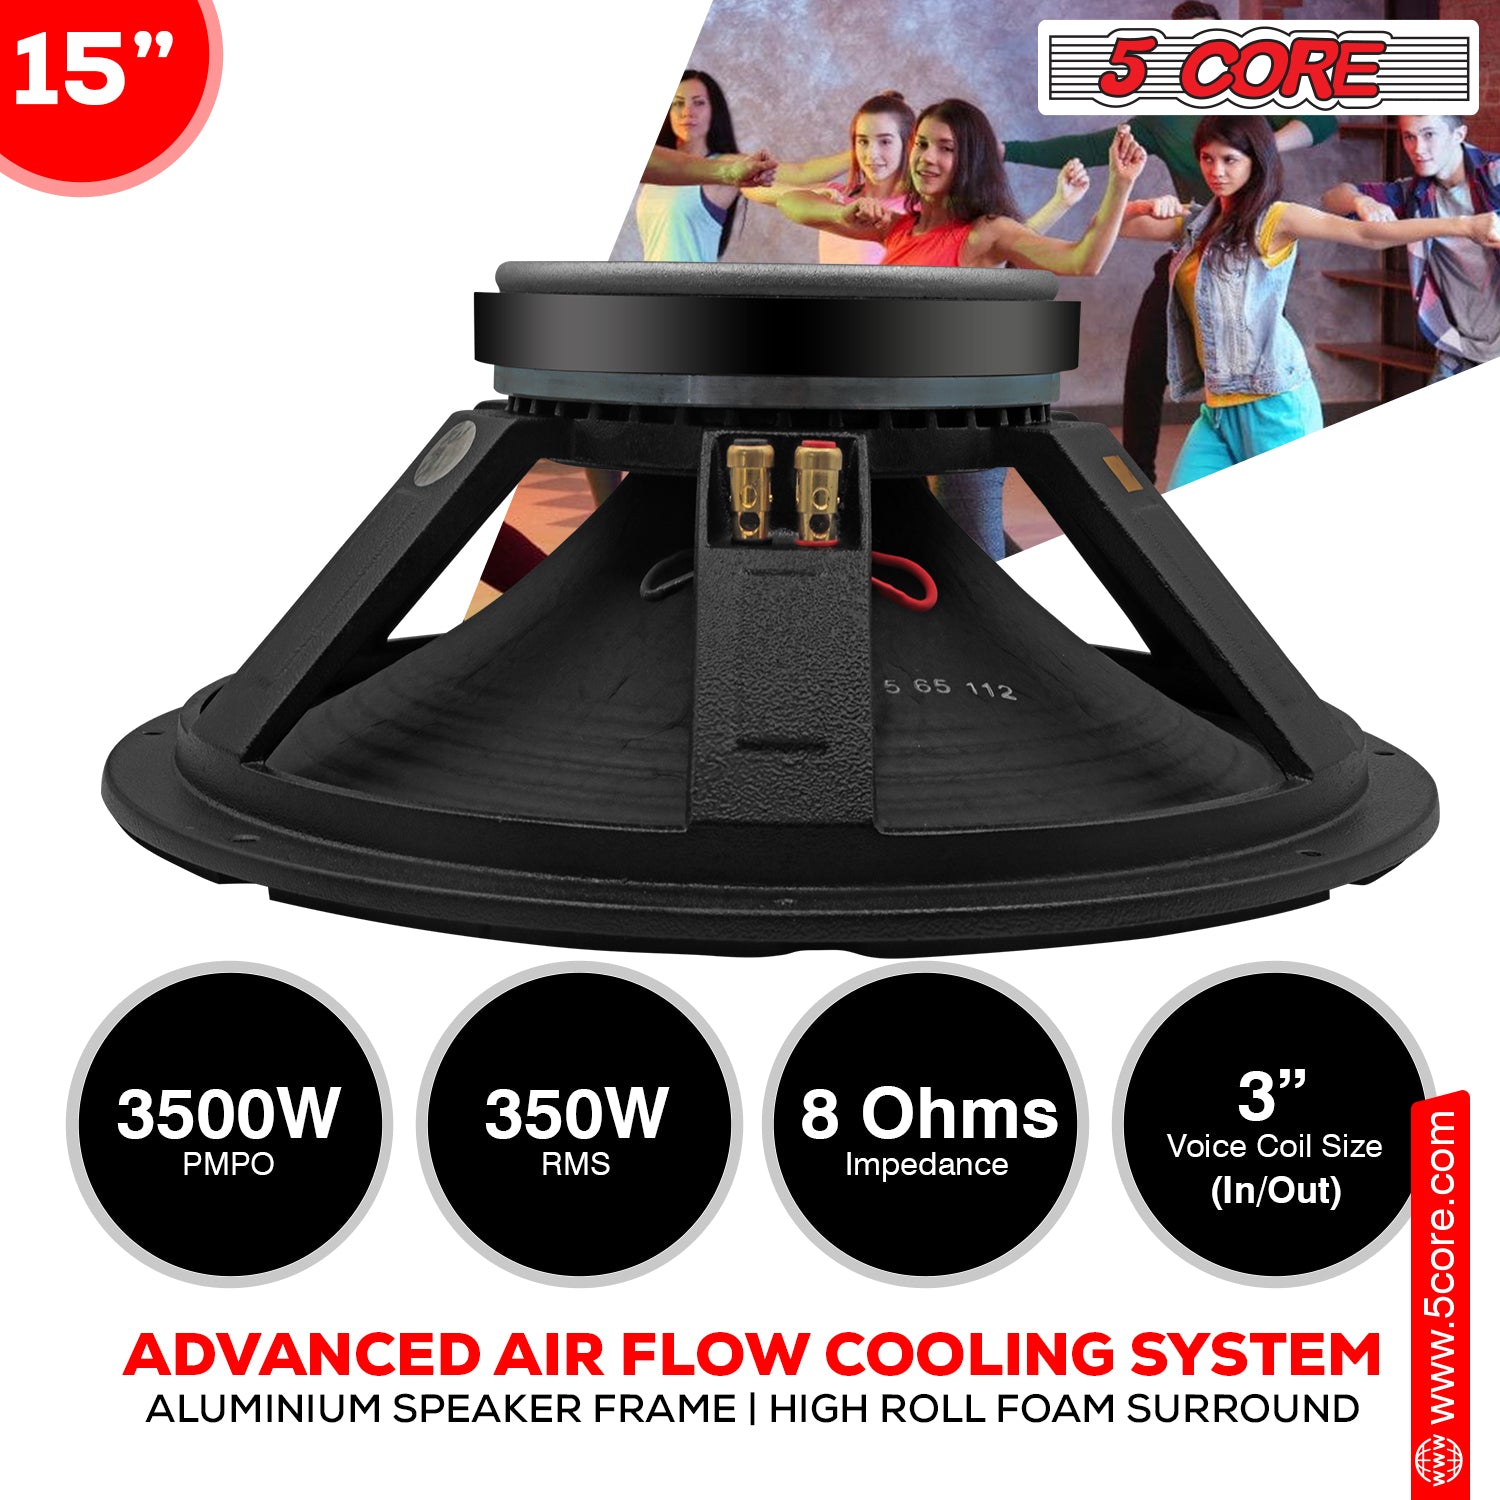 15" speaker advanced air flow cooling system.